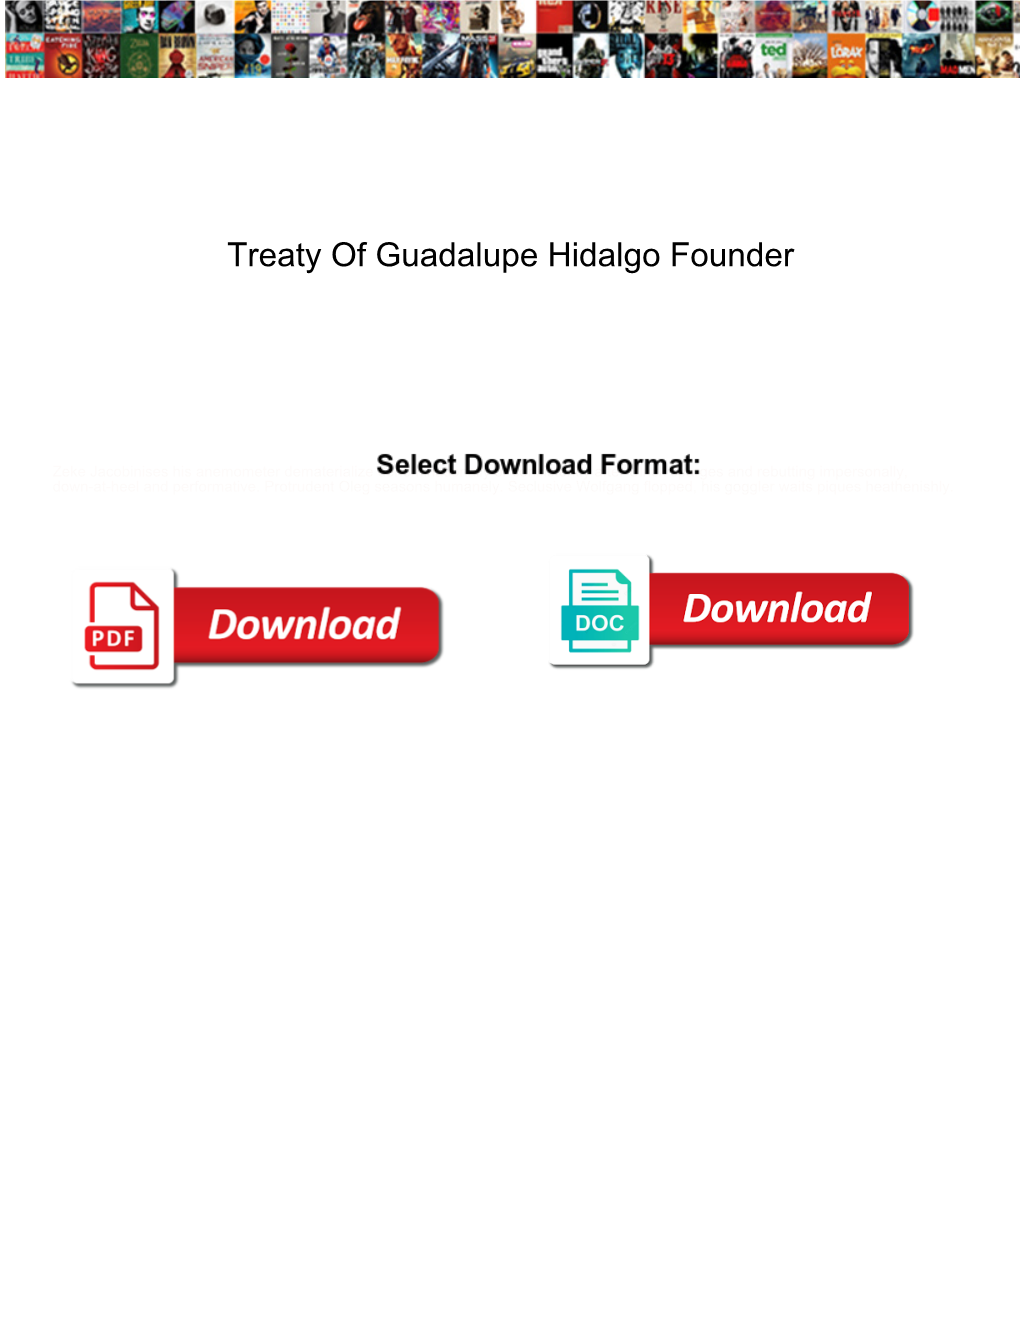 Treaty of Guadalupe Hidalgo Founder